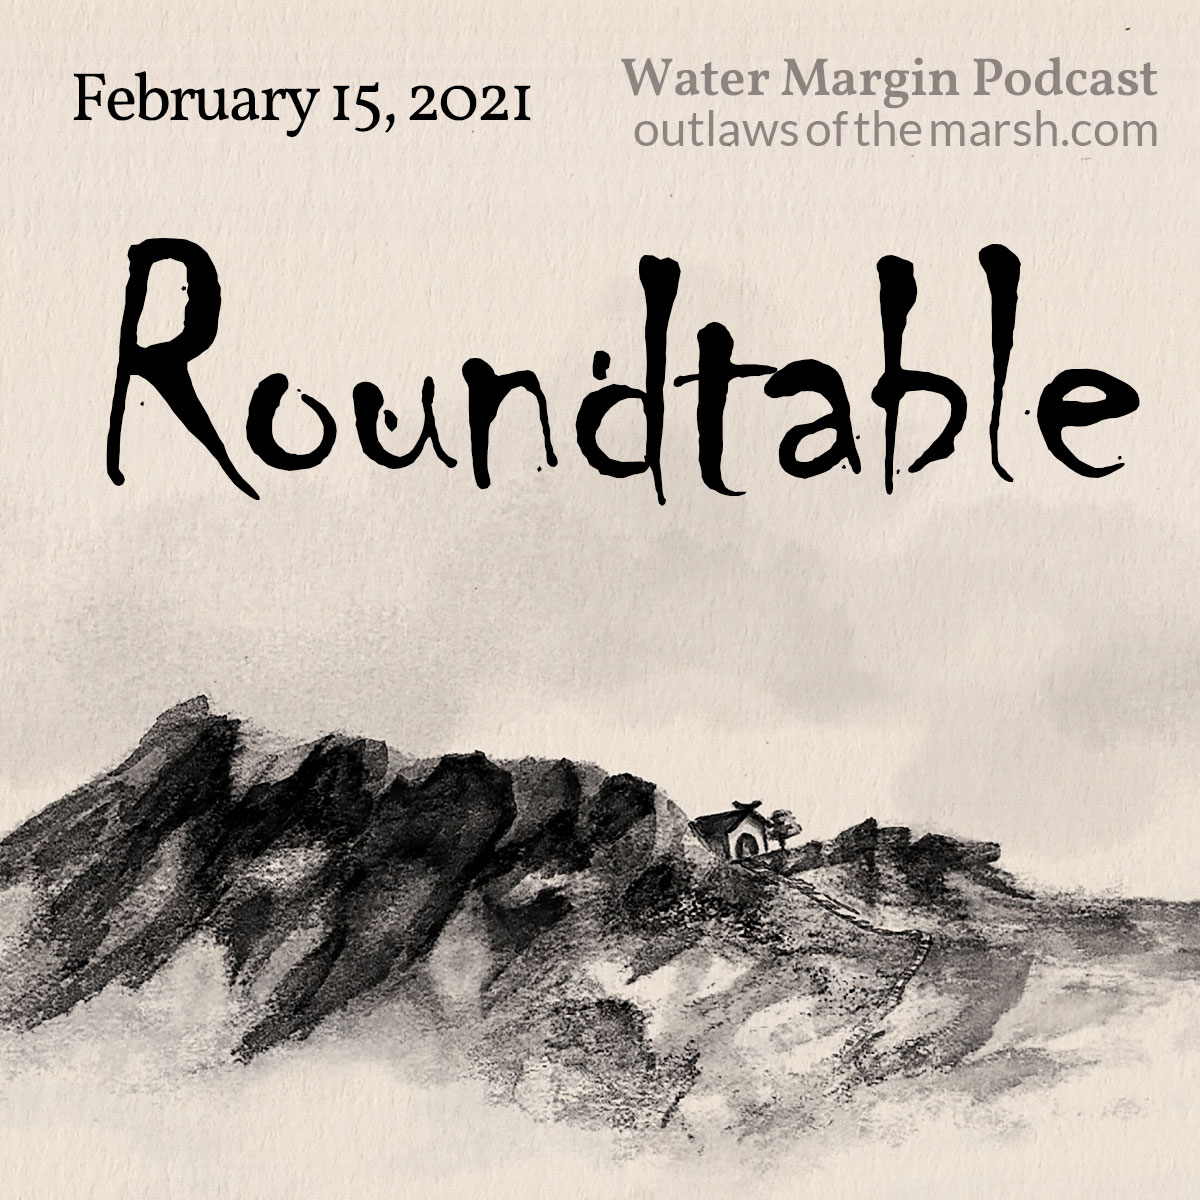 Water Margin Podcast: Announcement